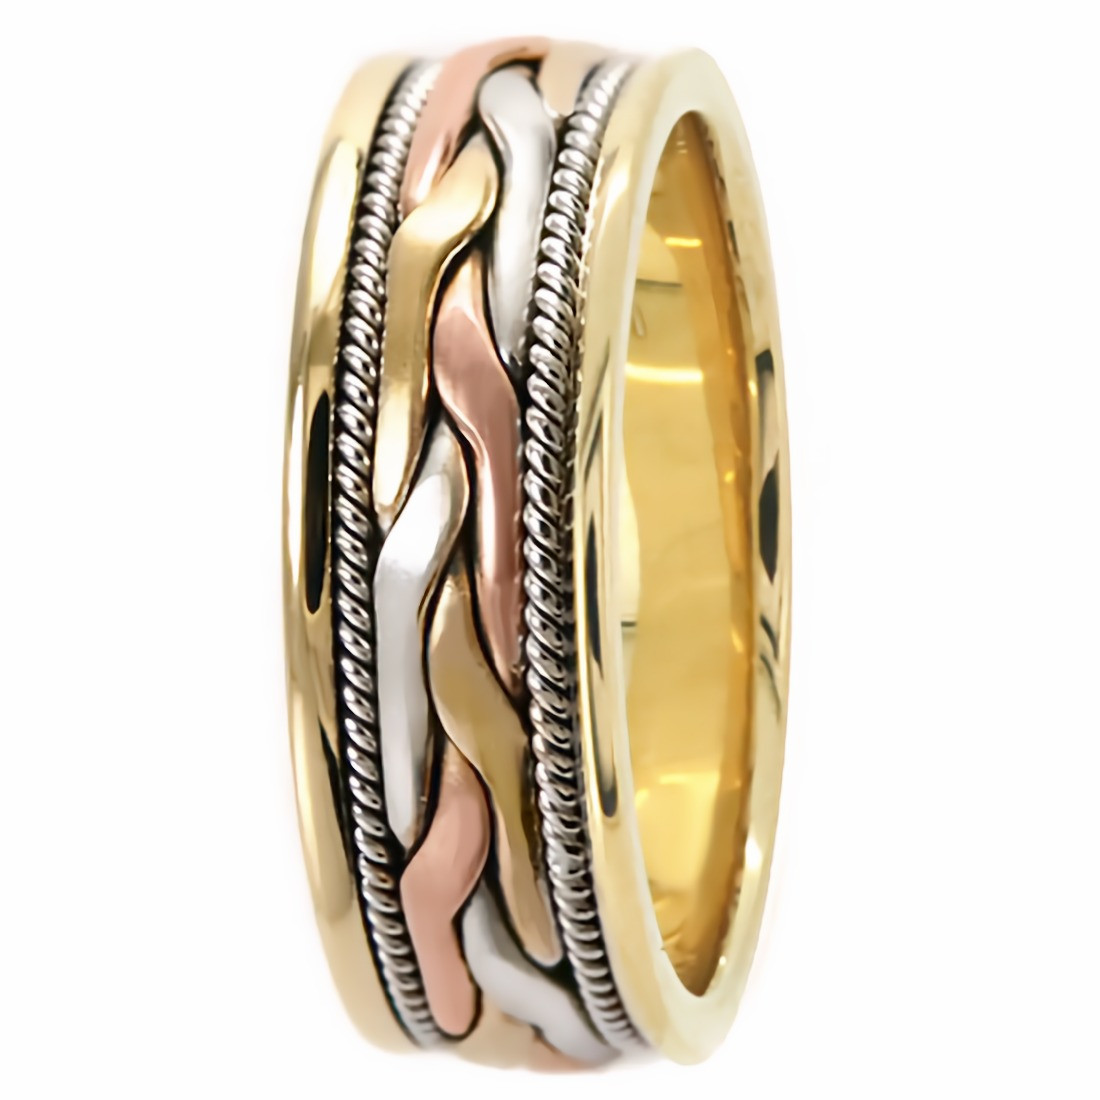 Handmade Braided 3-Tone 18k Gold Wedding Band Weave Ring